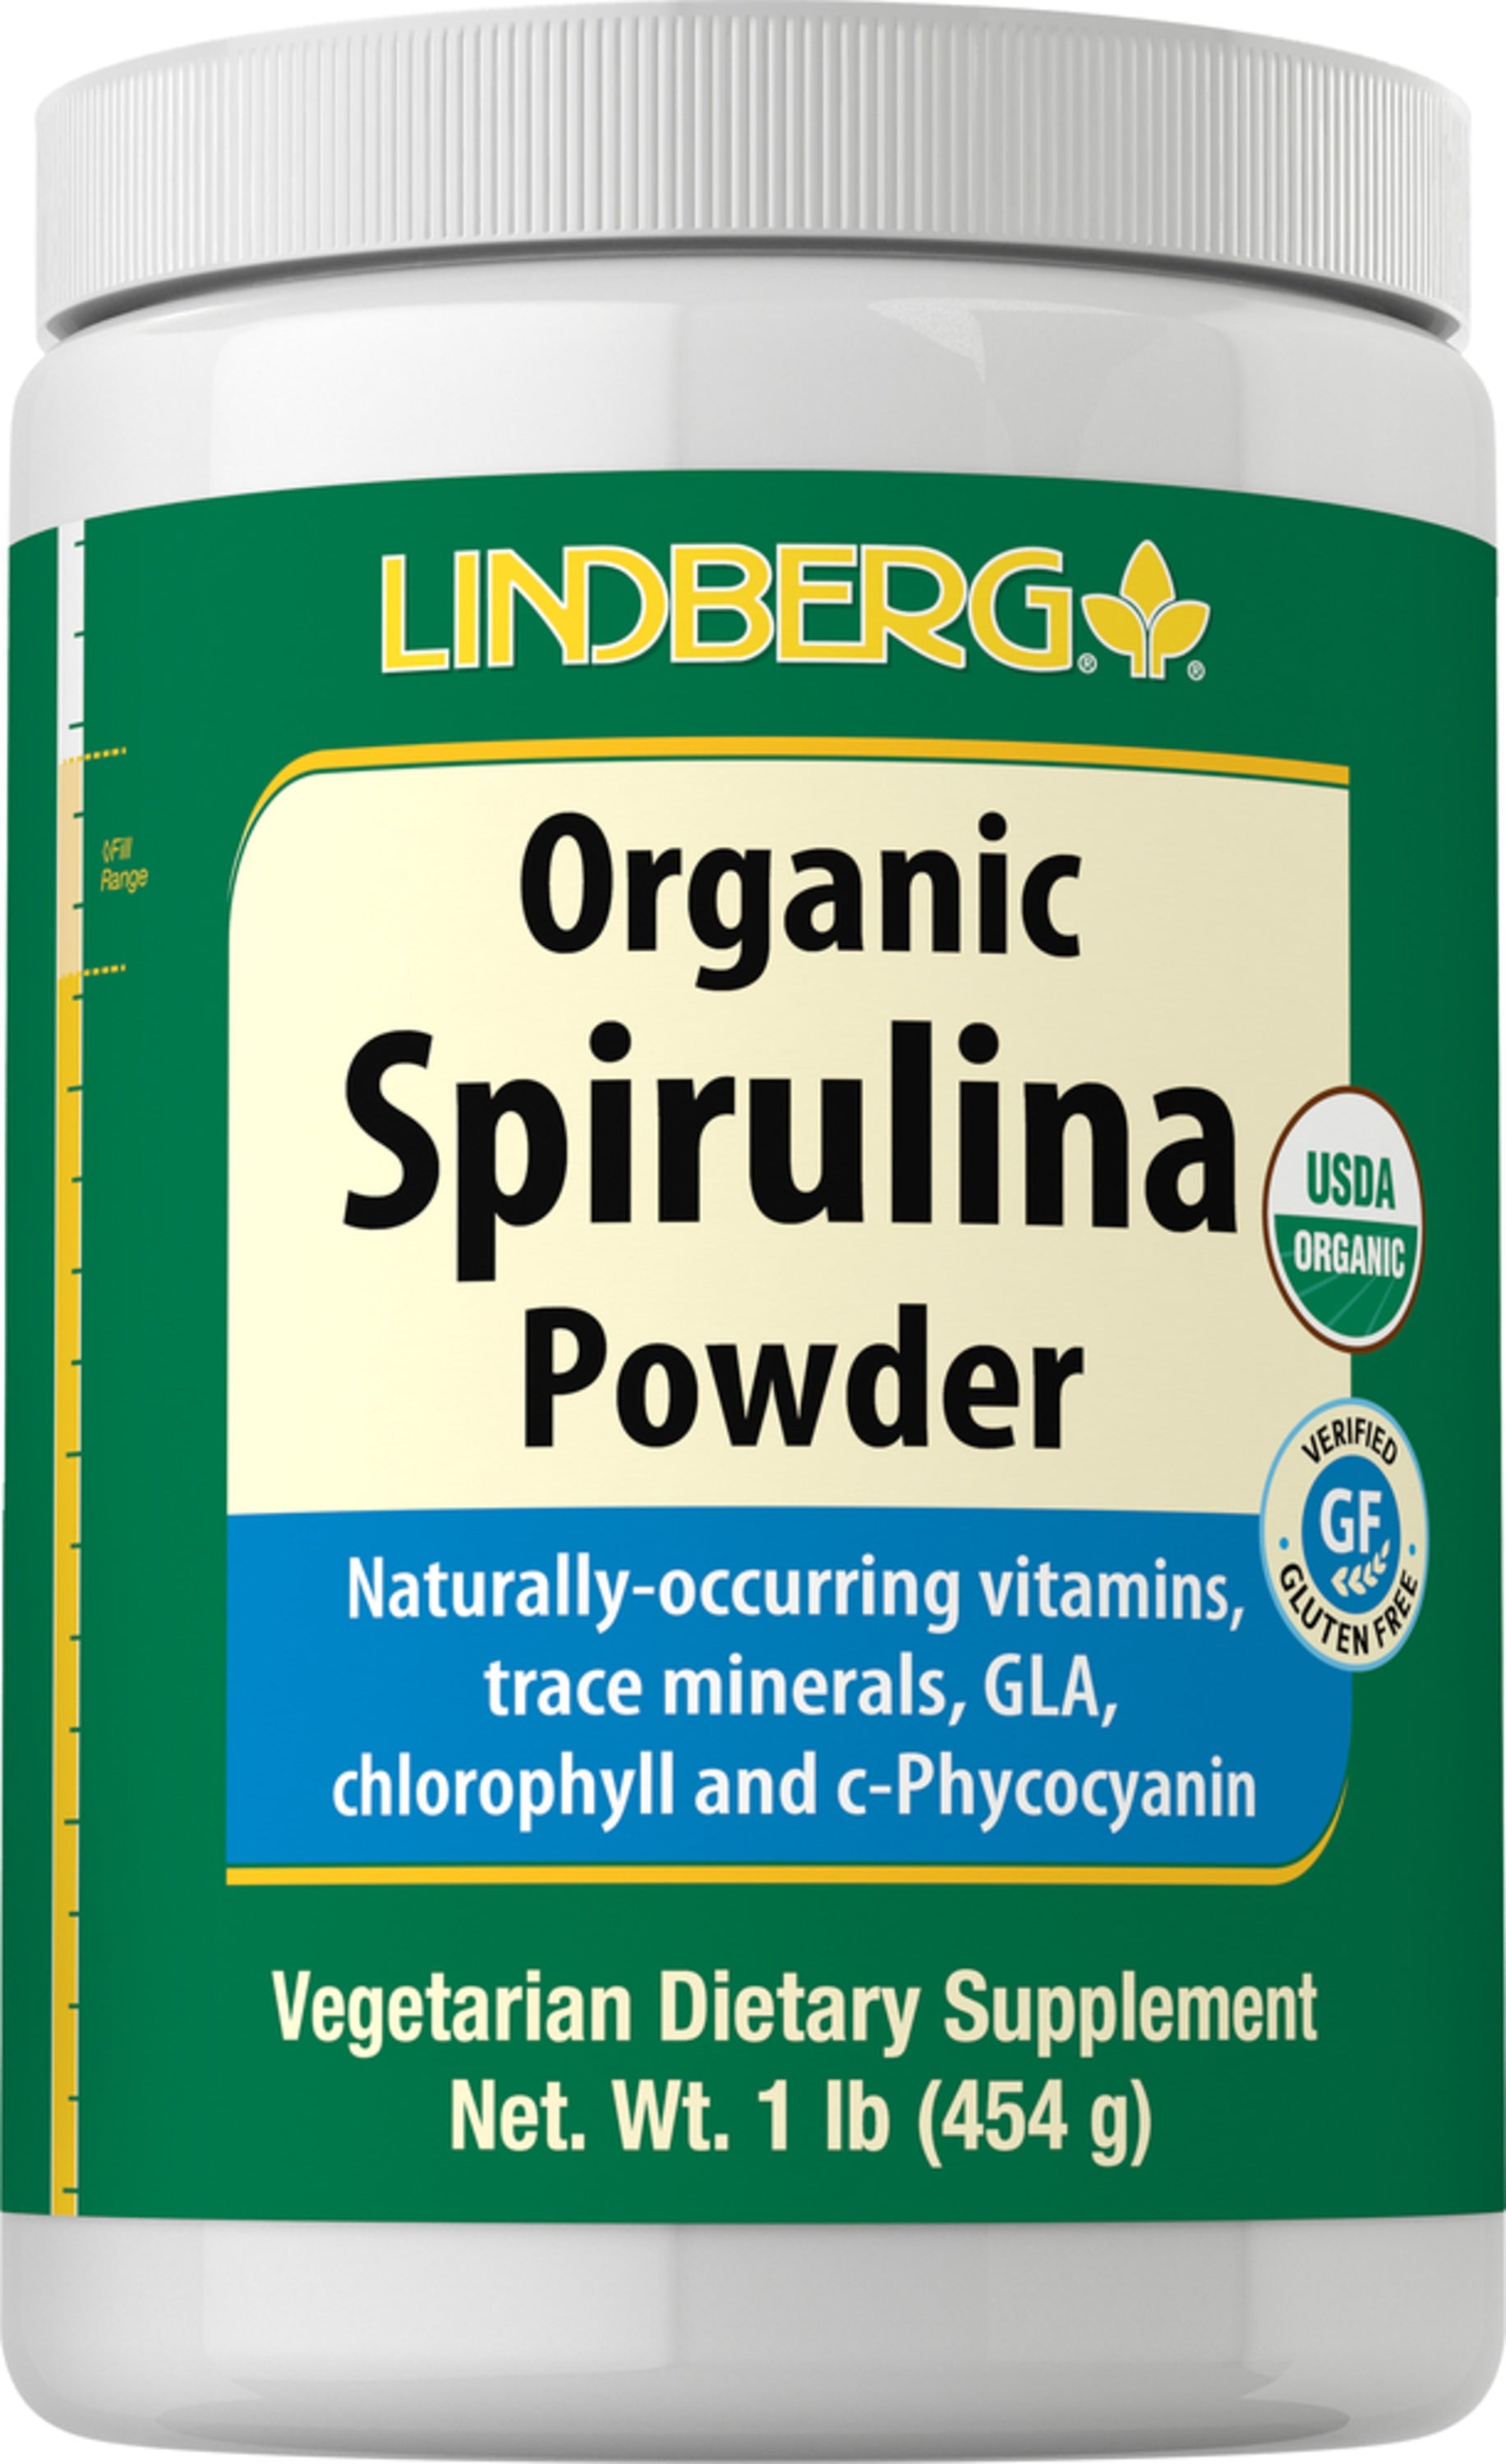 Spirulina (Blue-Green Algae) Powder, 1 lb (454 g) Bottle